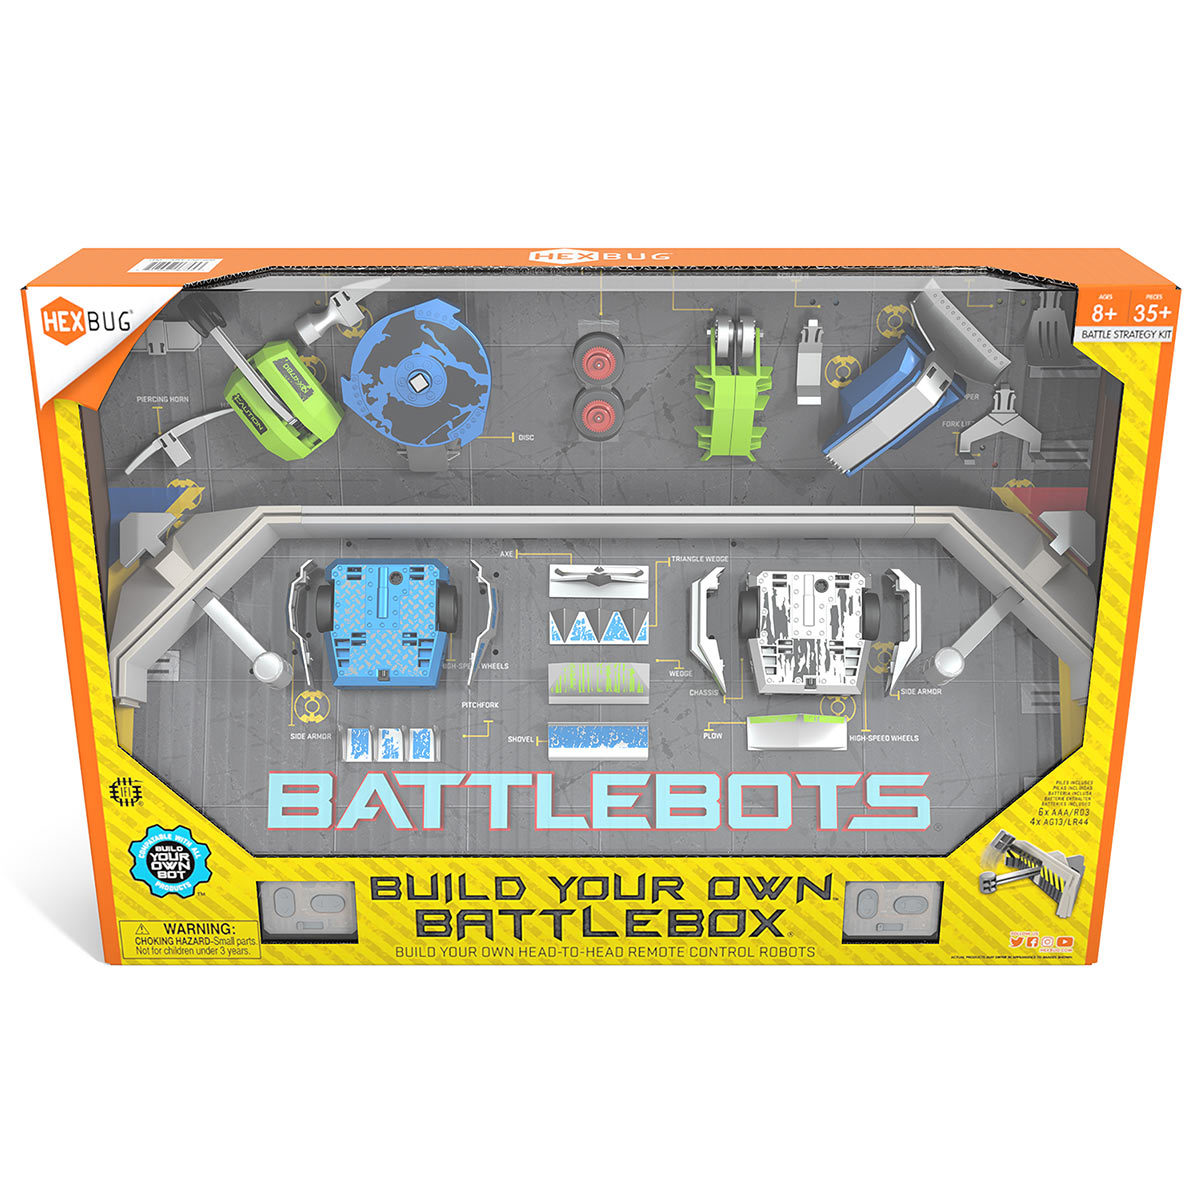 build your own battle bot